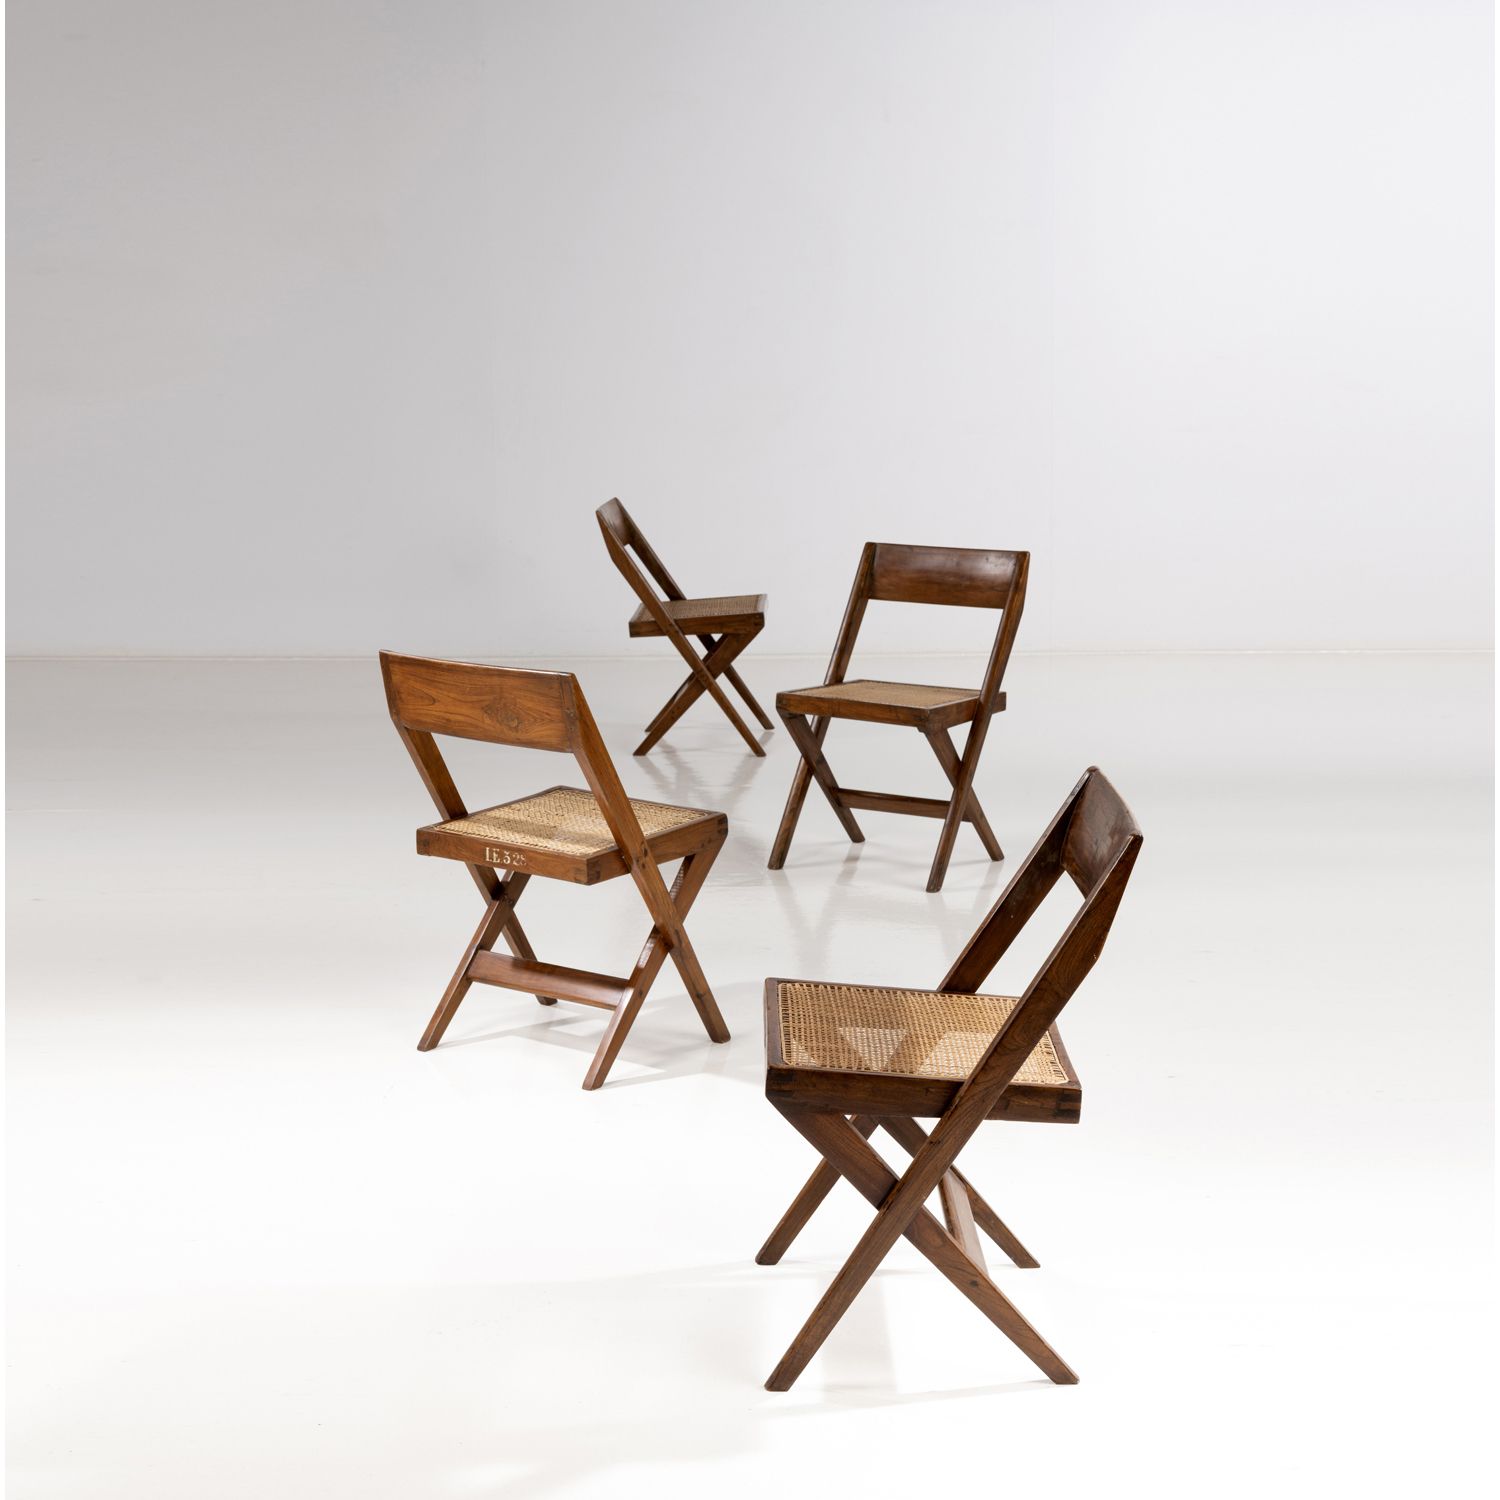 Null ƒ Pierre Jeanneret (1896-1967)

一套四把的图书馆椅子

柚木和藤条

一把椅子上画有 "LE 528 "的字样。

创&hellip;